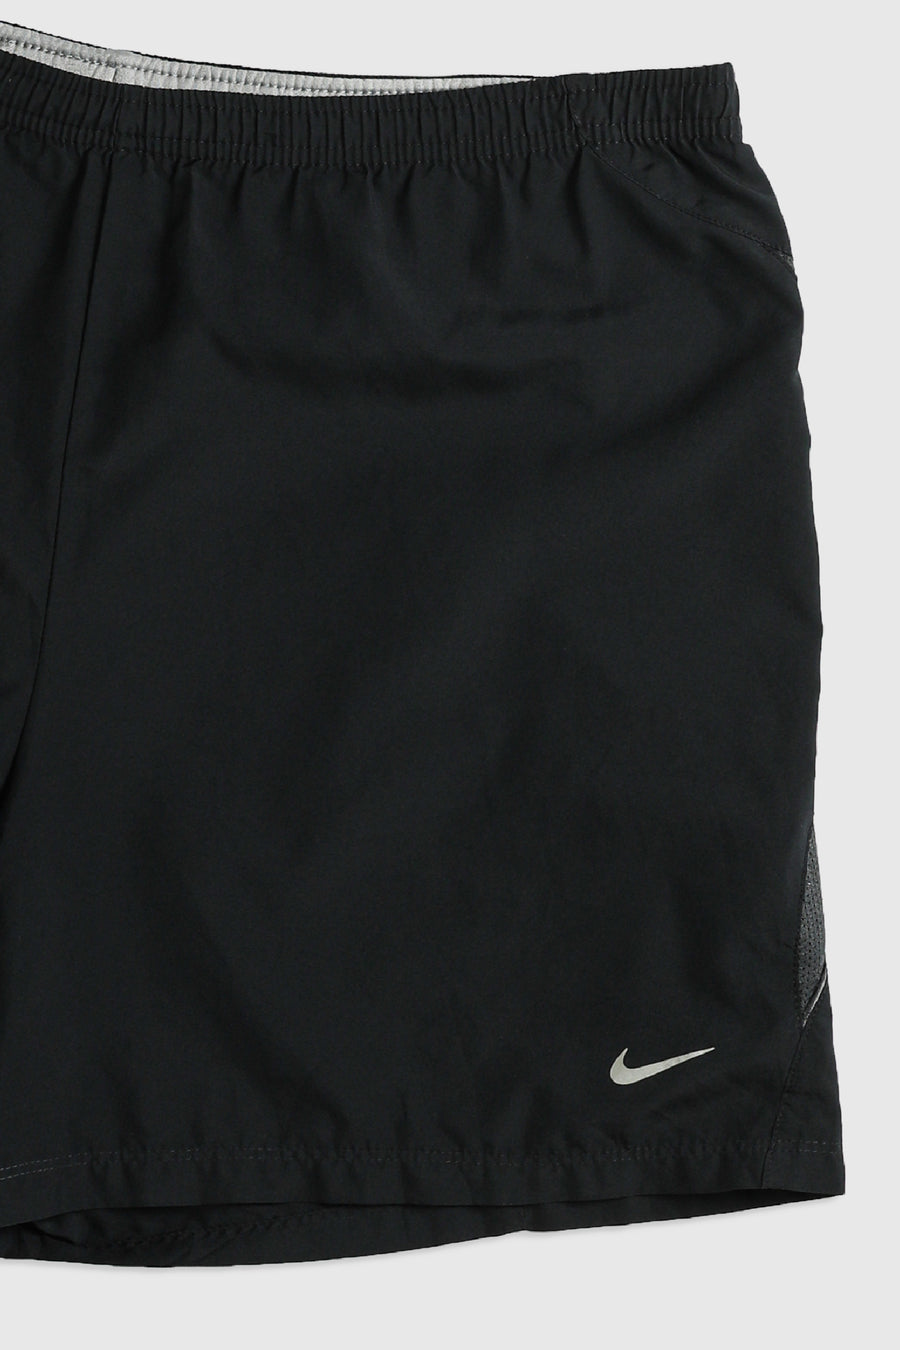 Vintage Nike Shorts - L